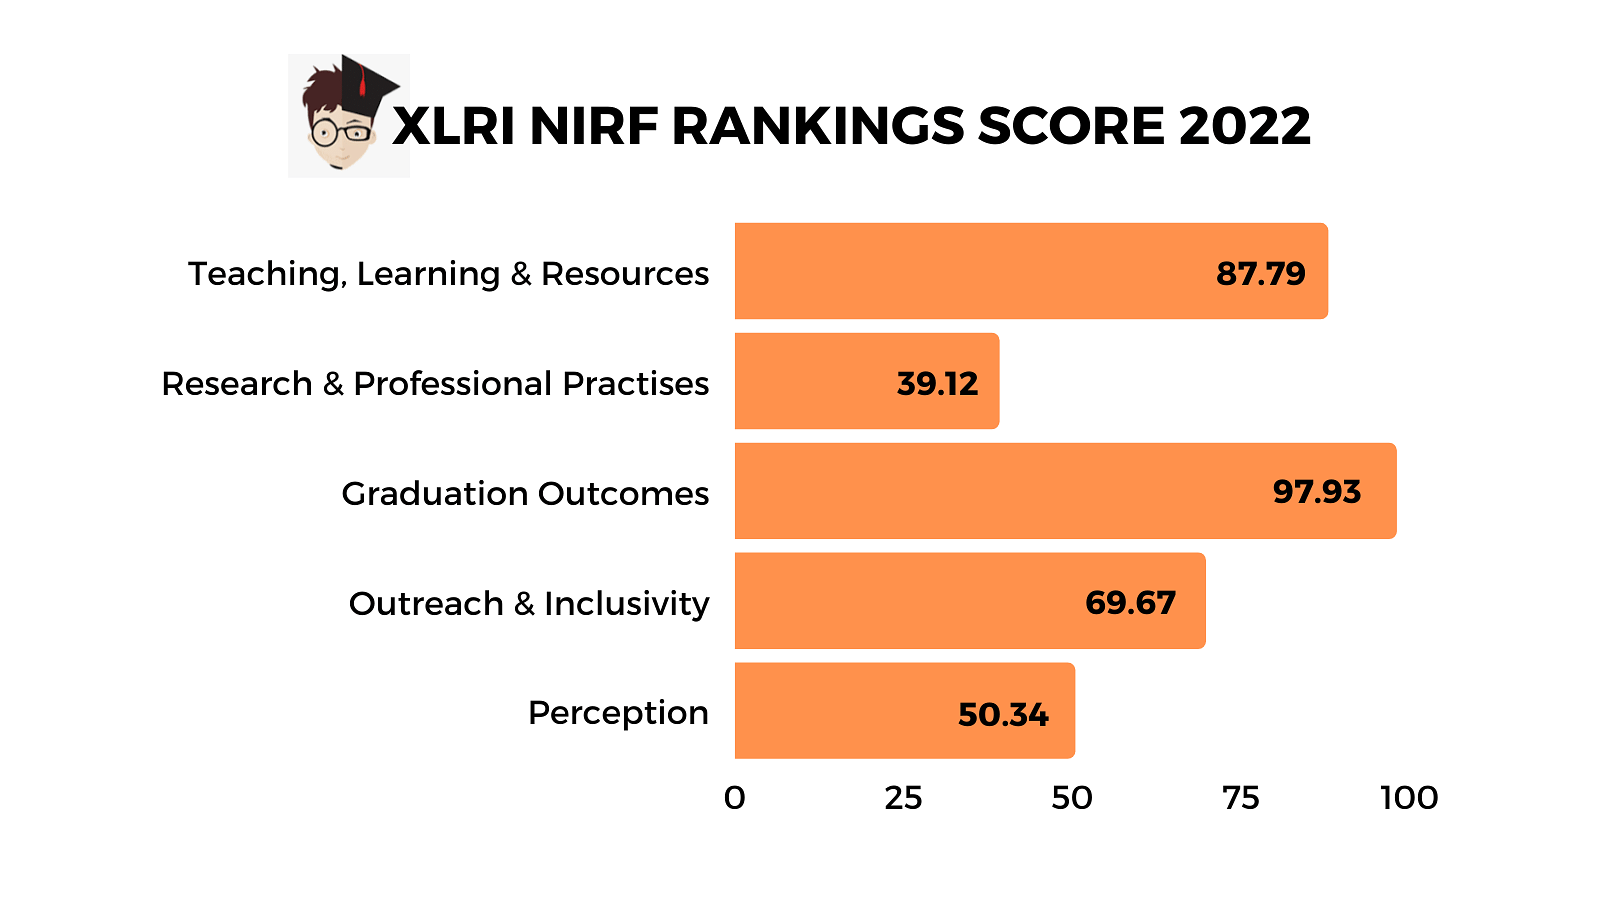 XLRI NIRF Ranking 2022 Scores